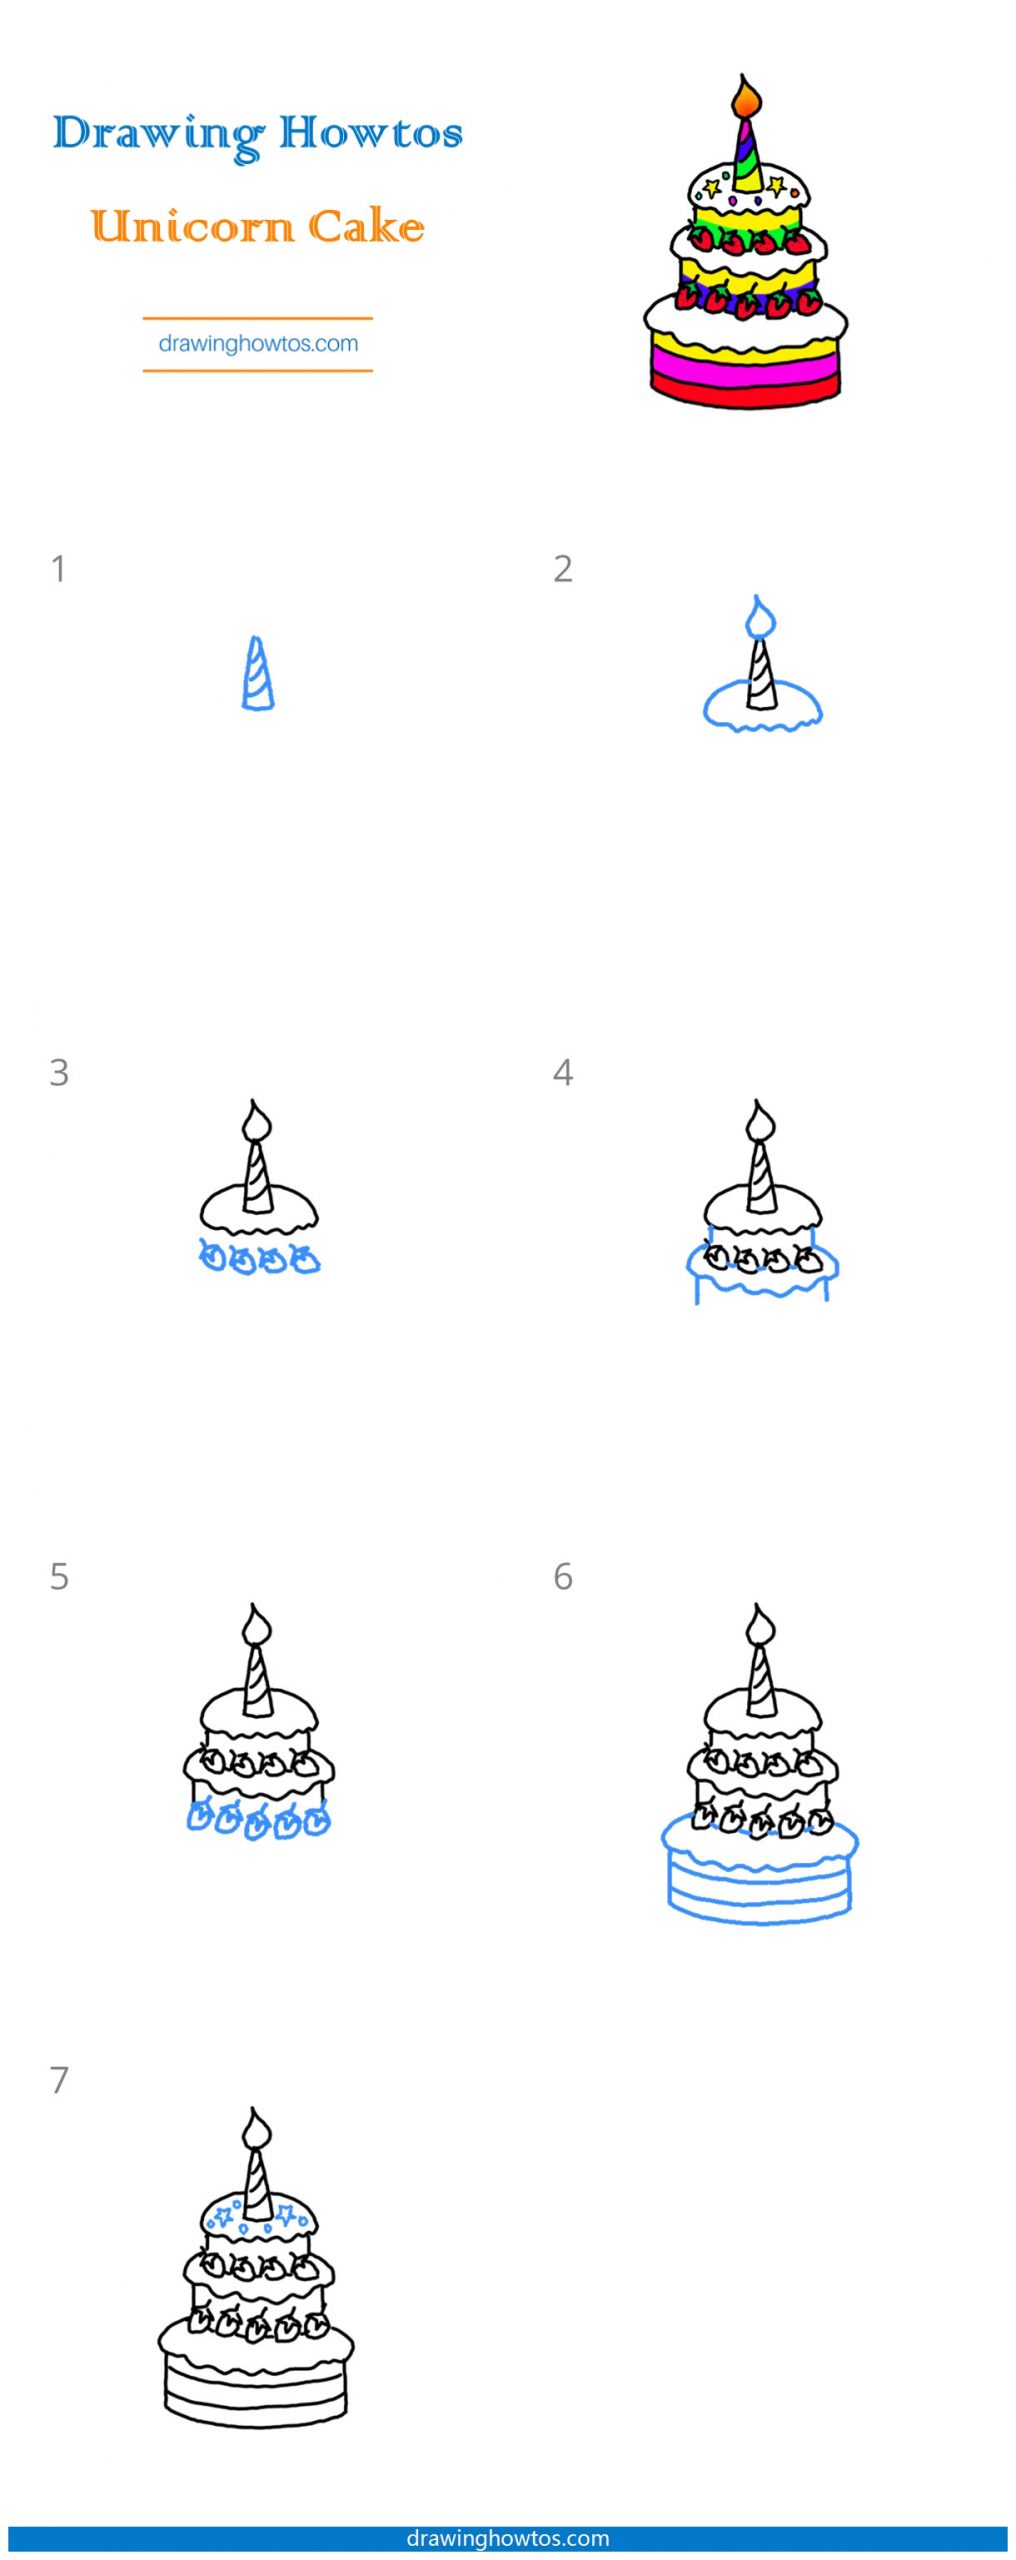 How to Draw a Unicorn Cake Step by Step